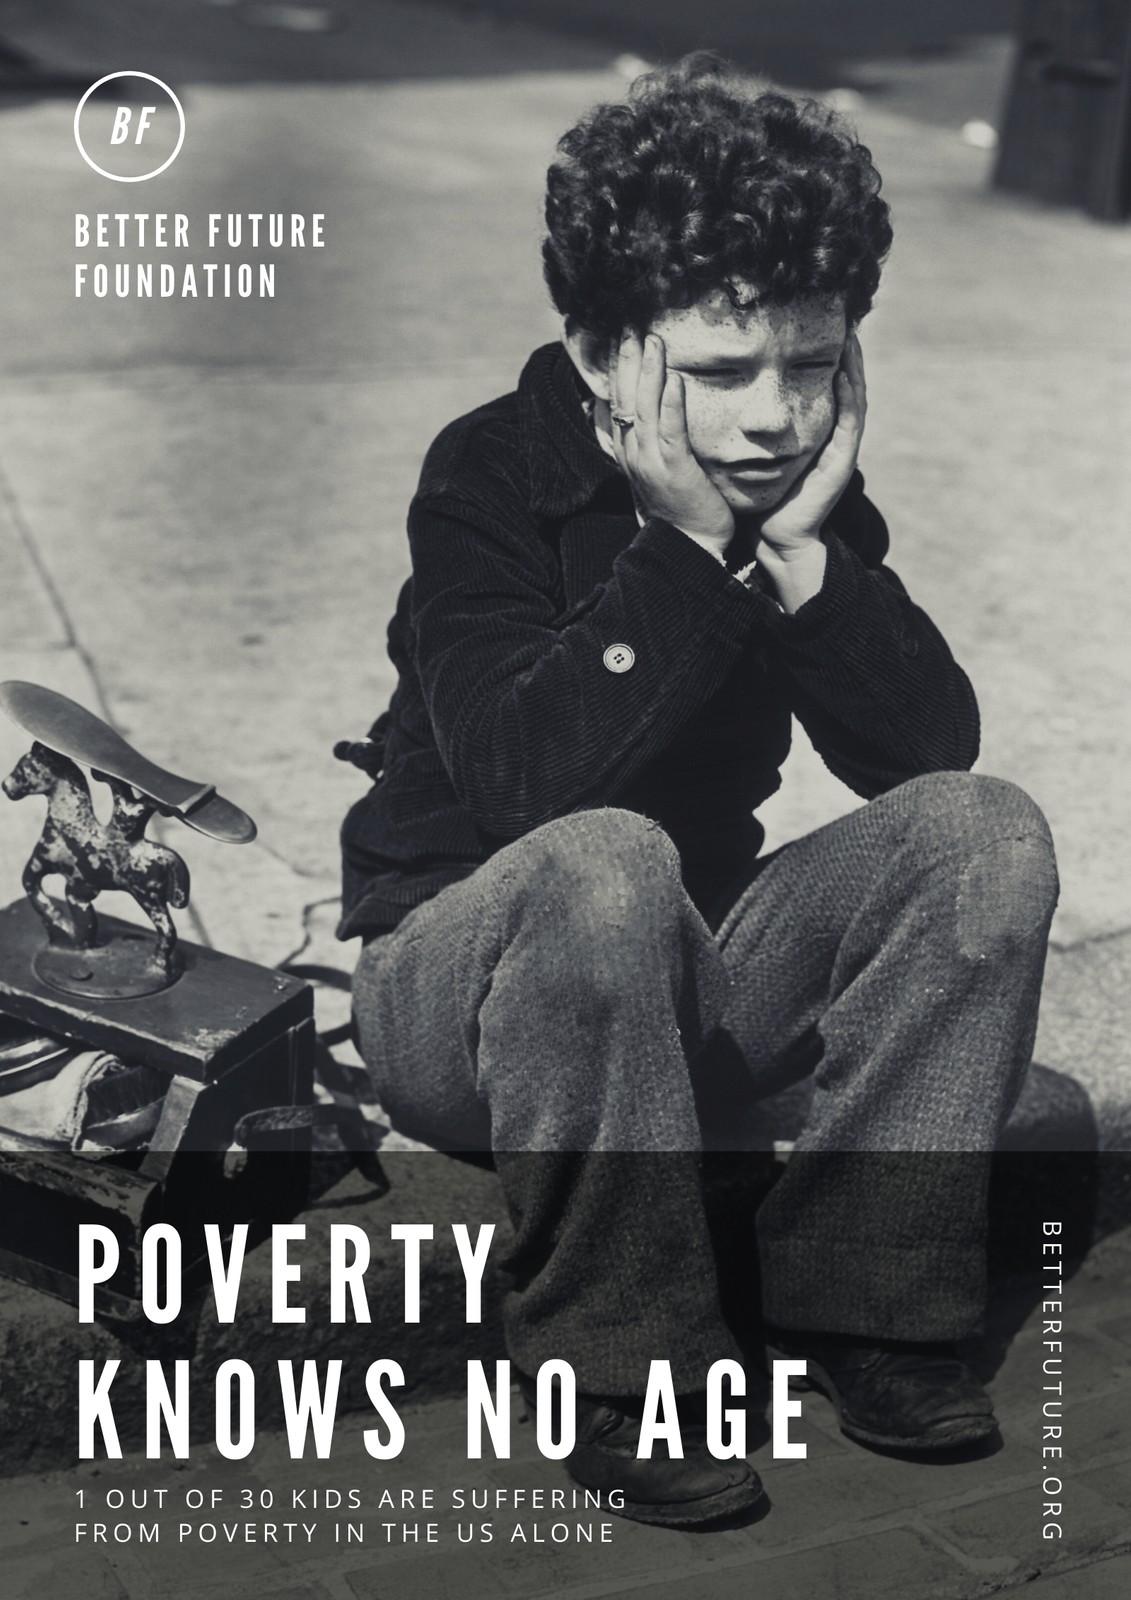 creative poverty posters